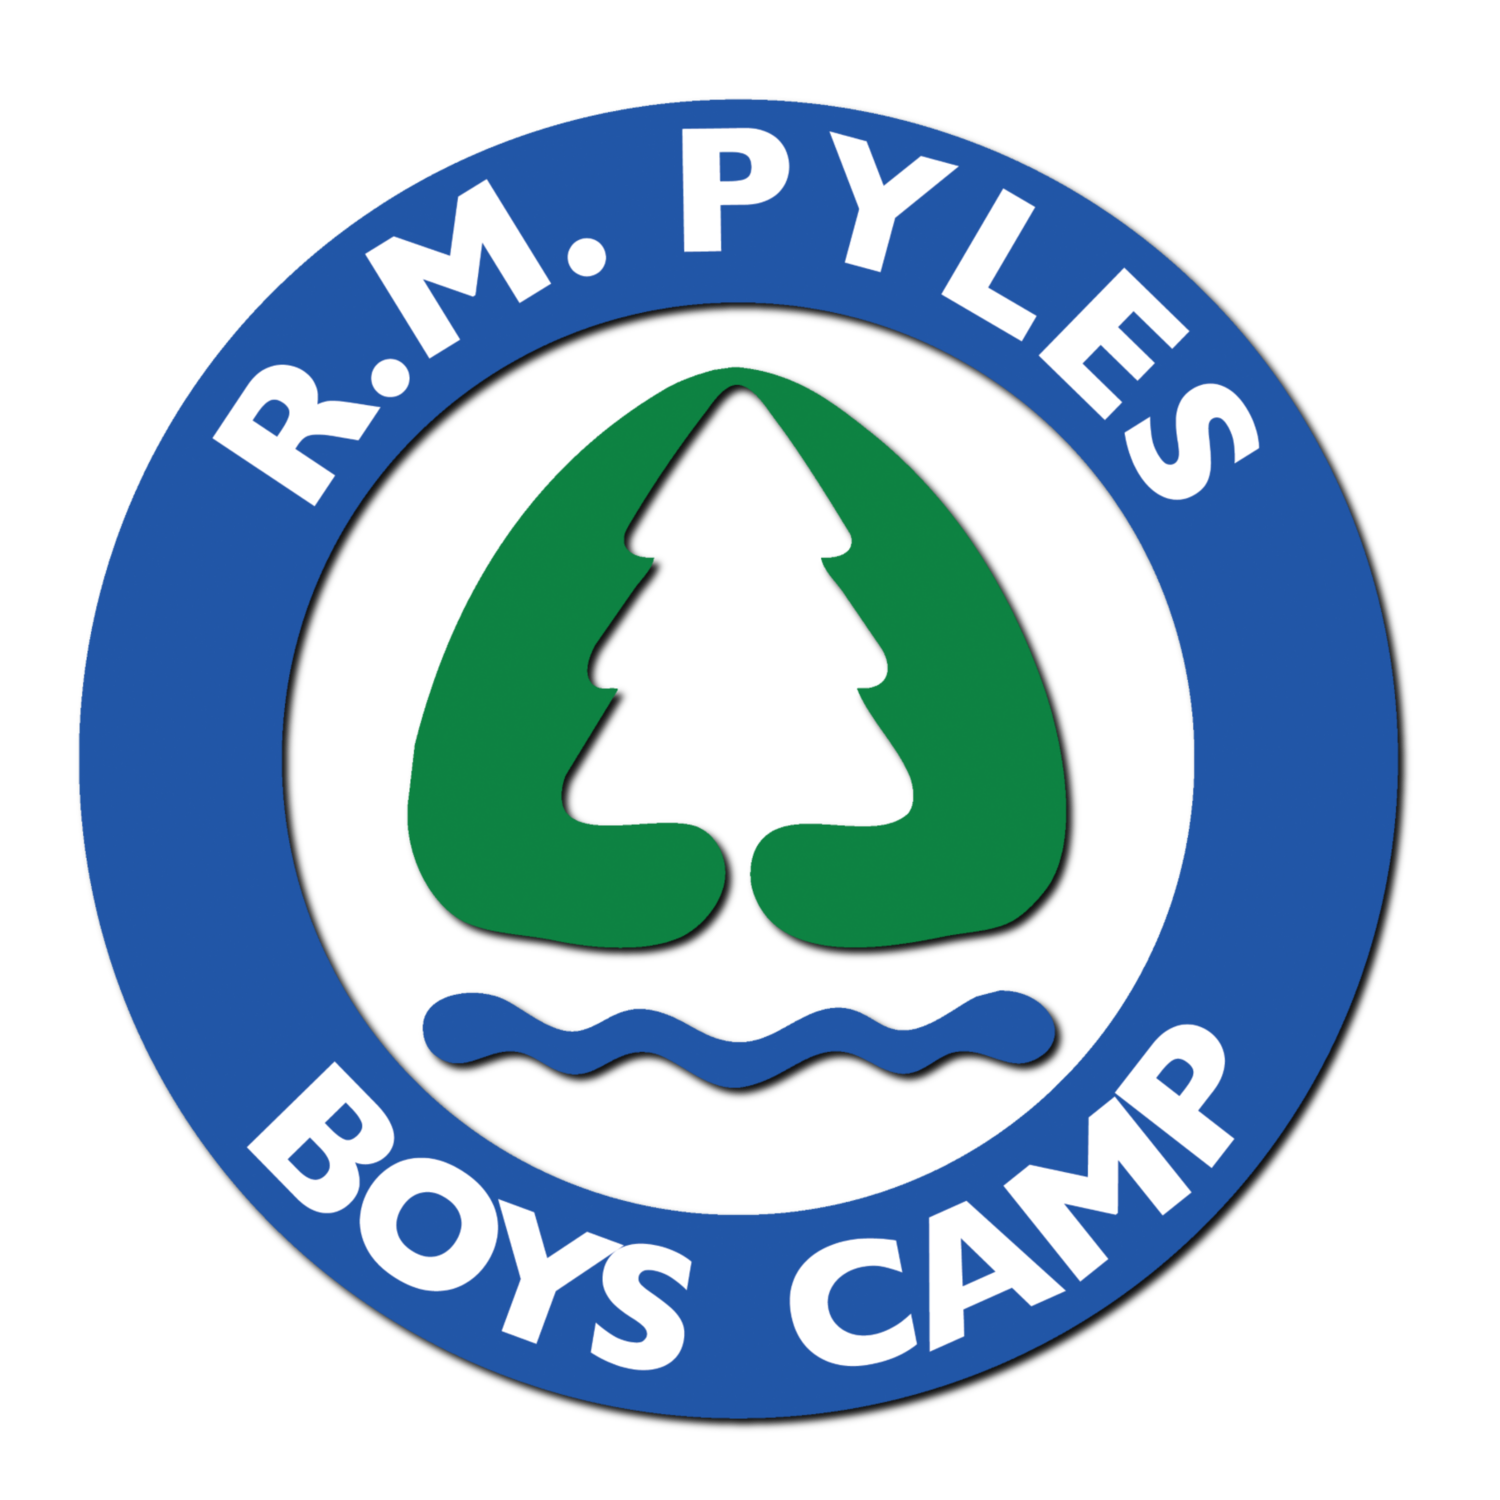 Former Kern County Sheriff Commander Talks Pyle’s Boys Camp BBQ